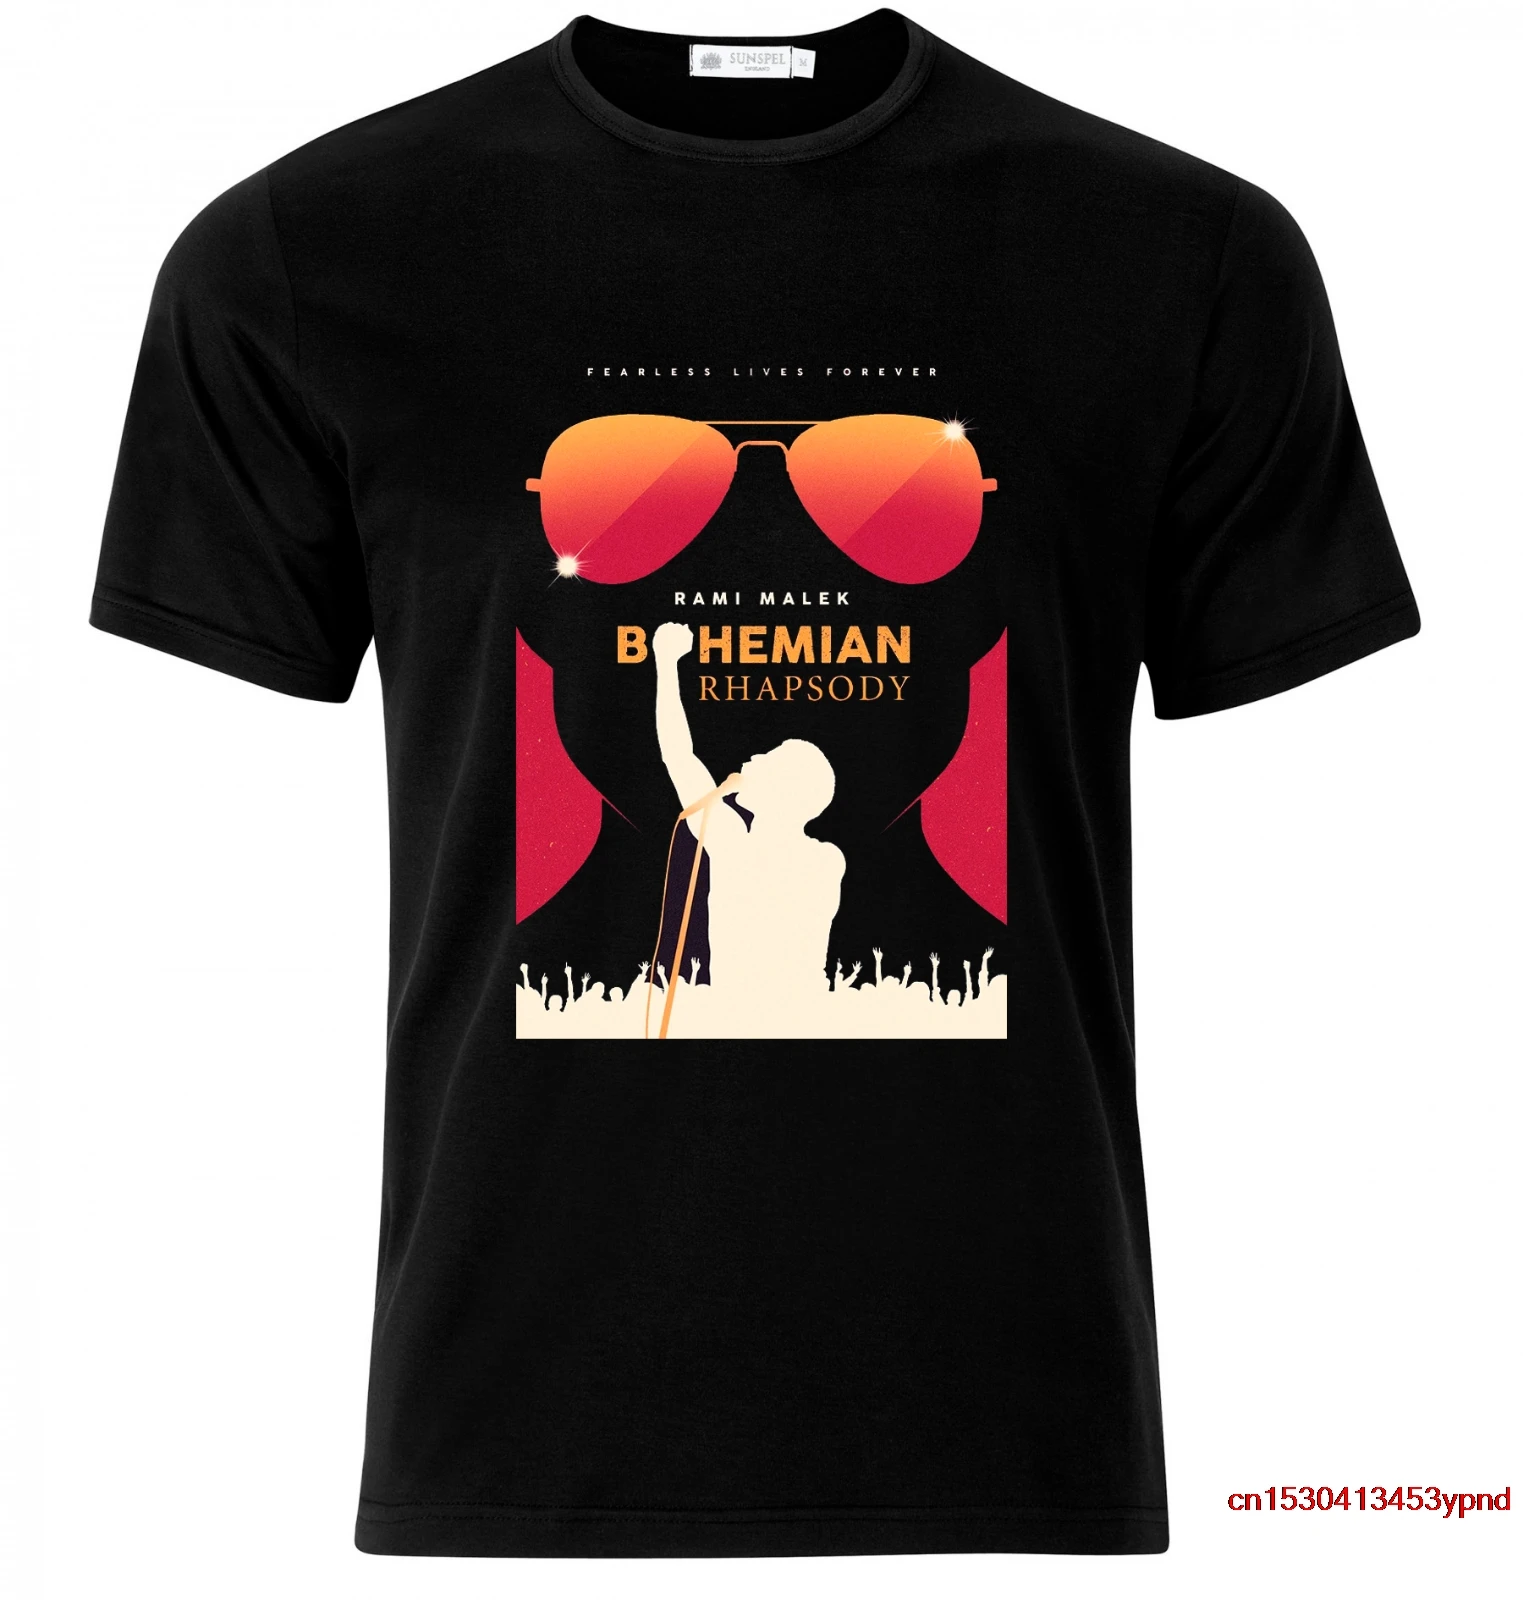 

Queen (Freddie Mercury), Богемская футболка Rhapsody (Rami Malek), совершенно новая мужская футболка, queen tee